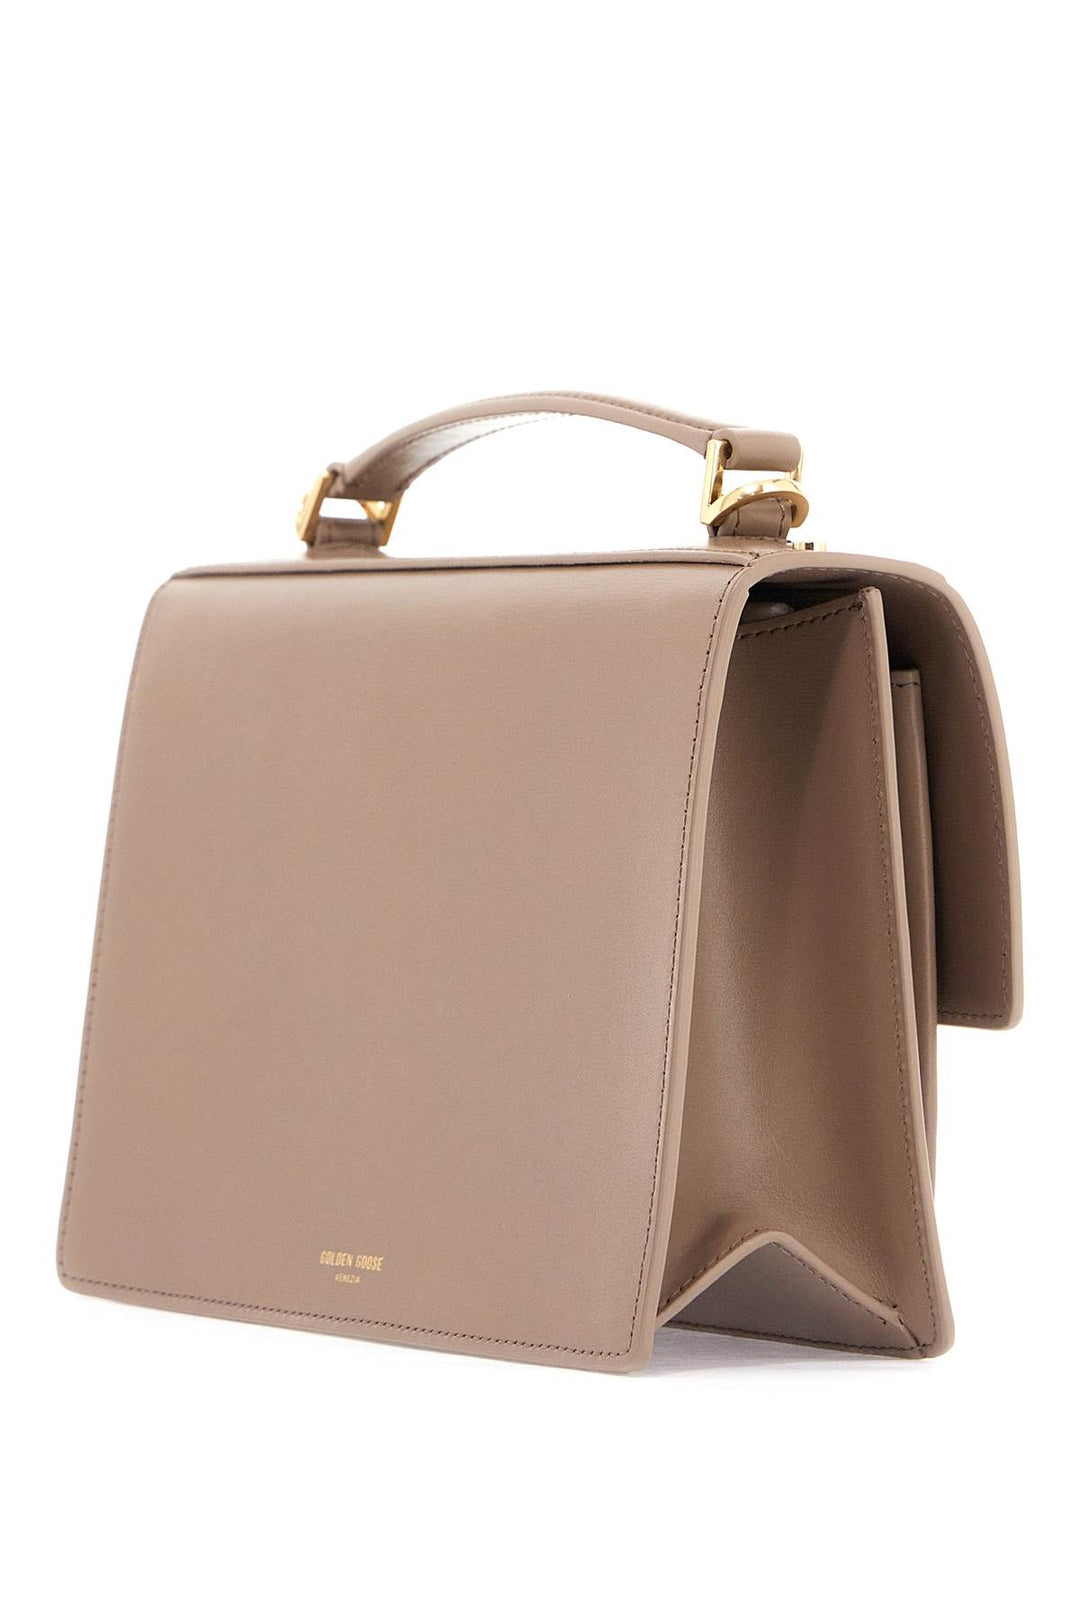 Golden Goose Venice Leather Handbag With Palmell   Beige